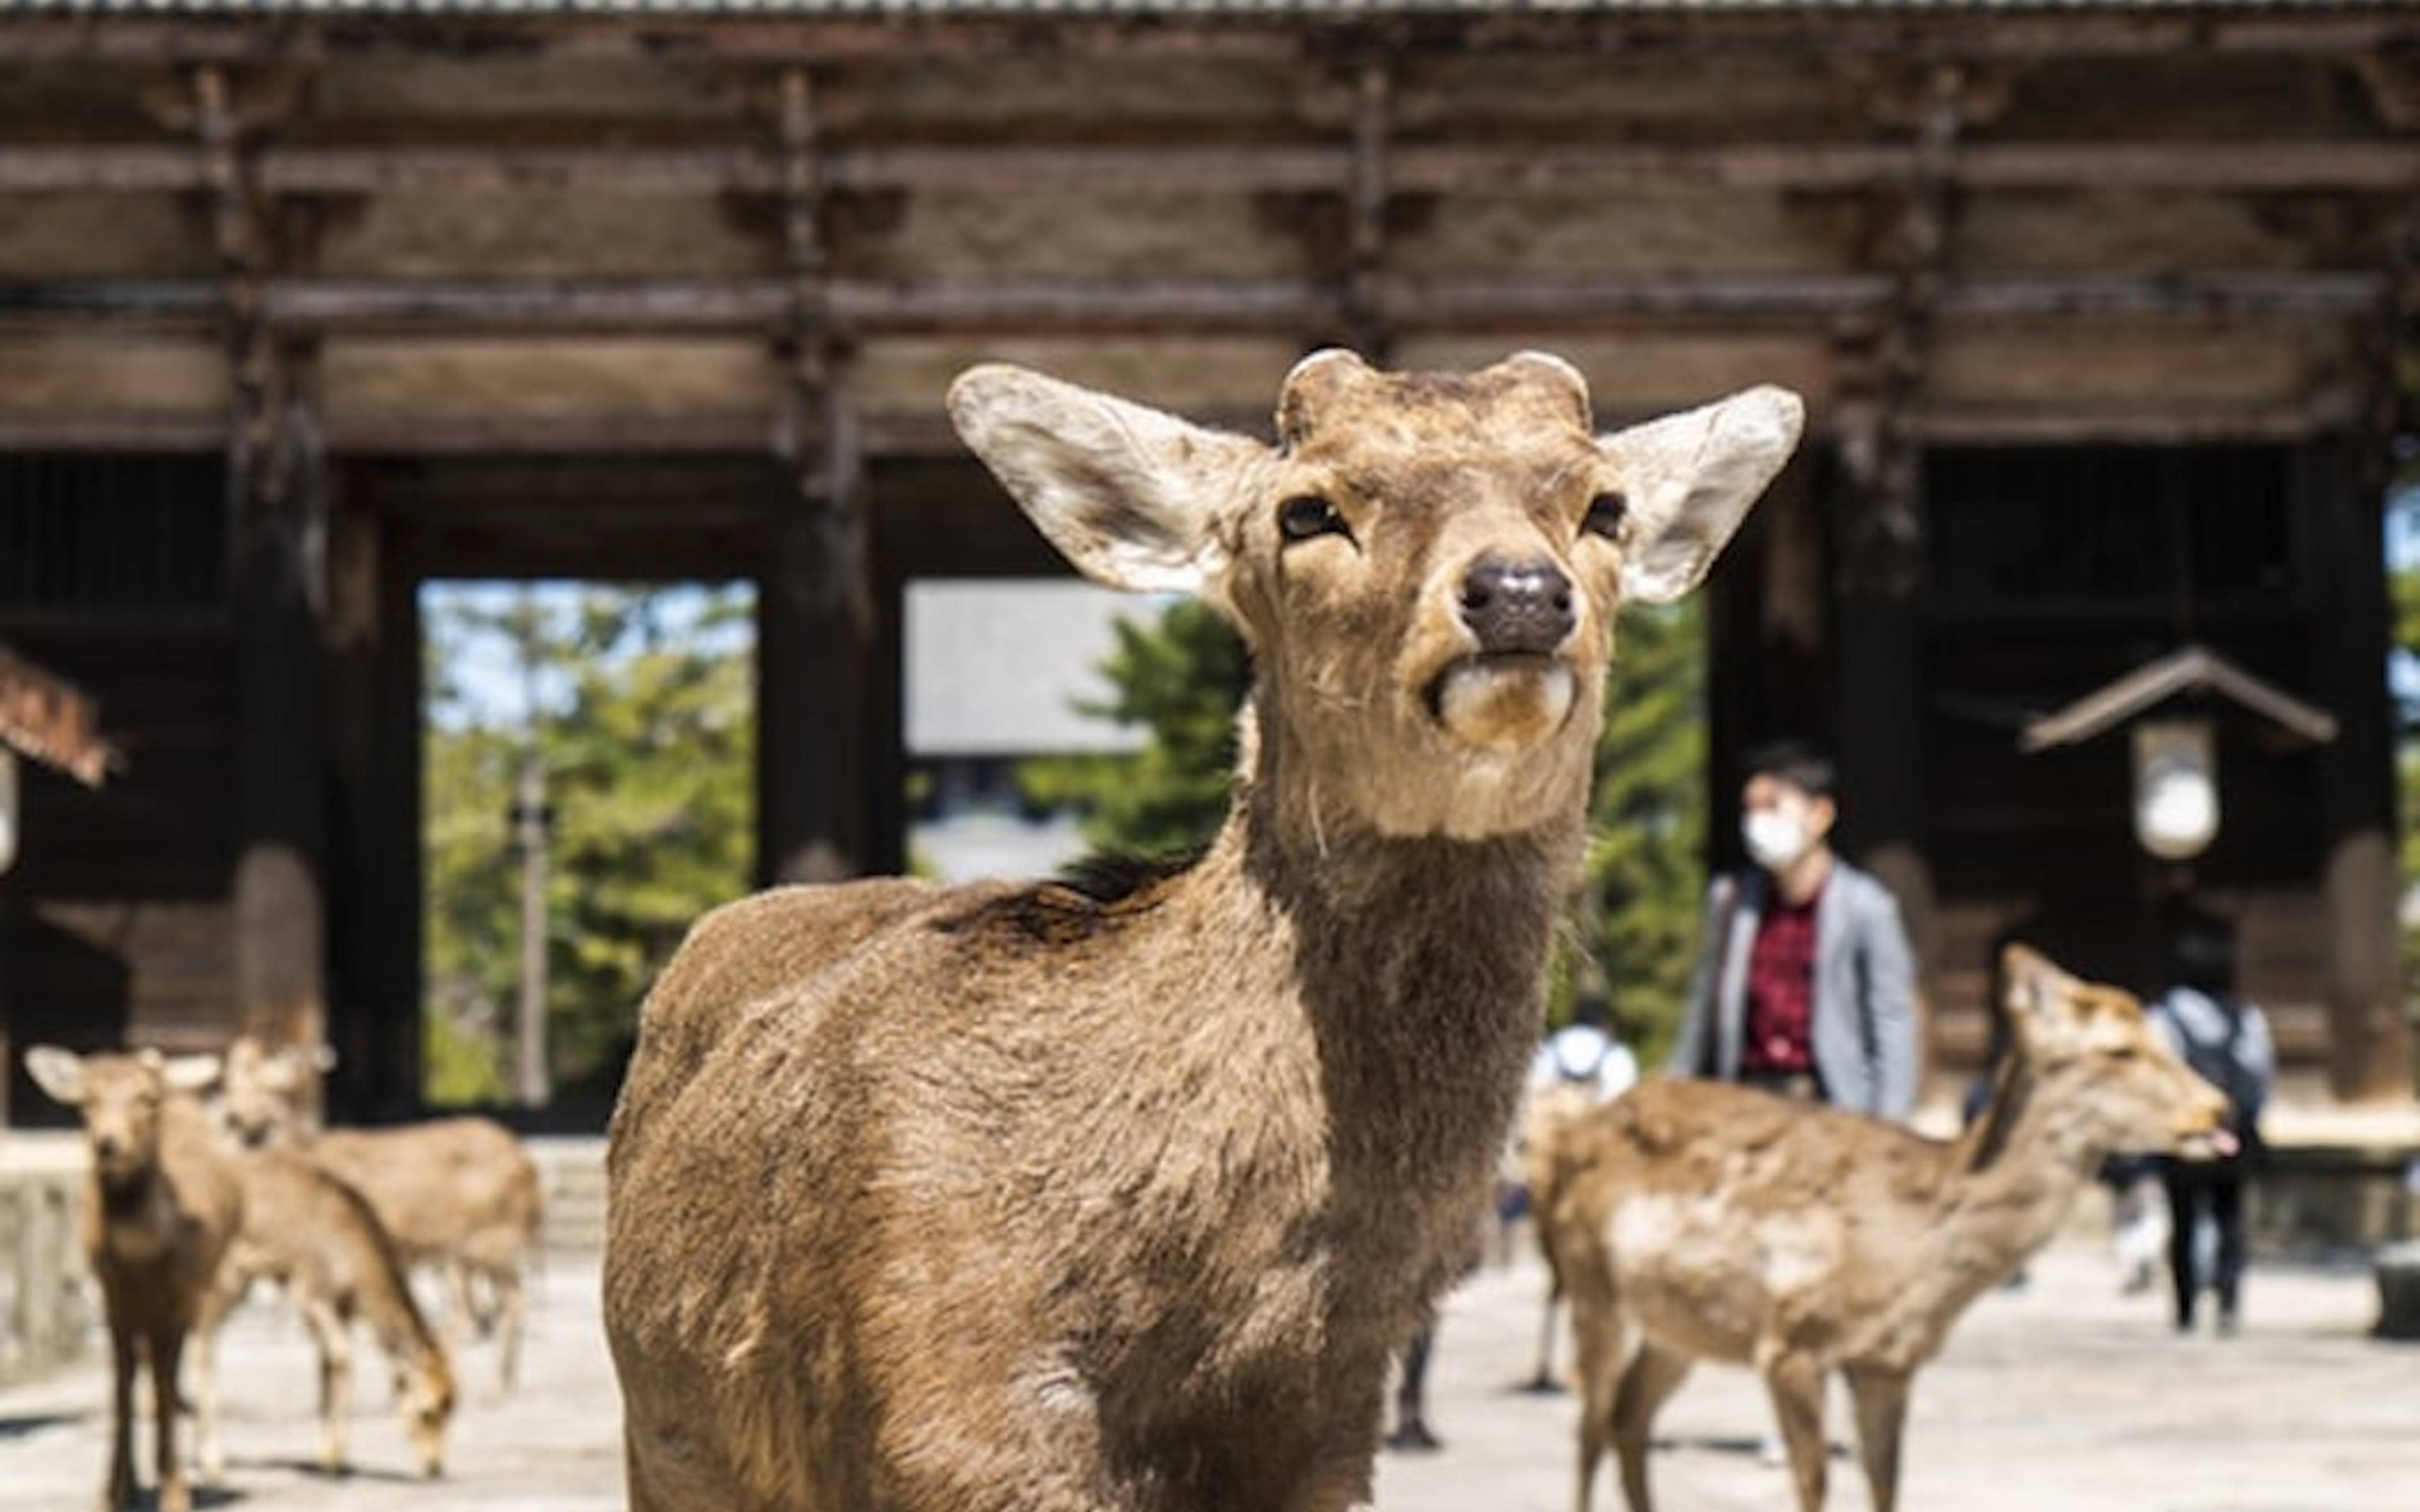 Esplorate la città di Nara